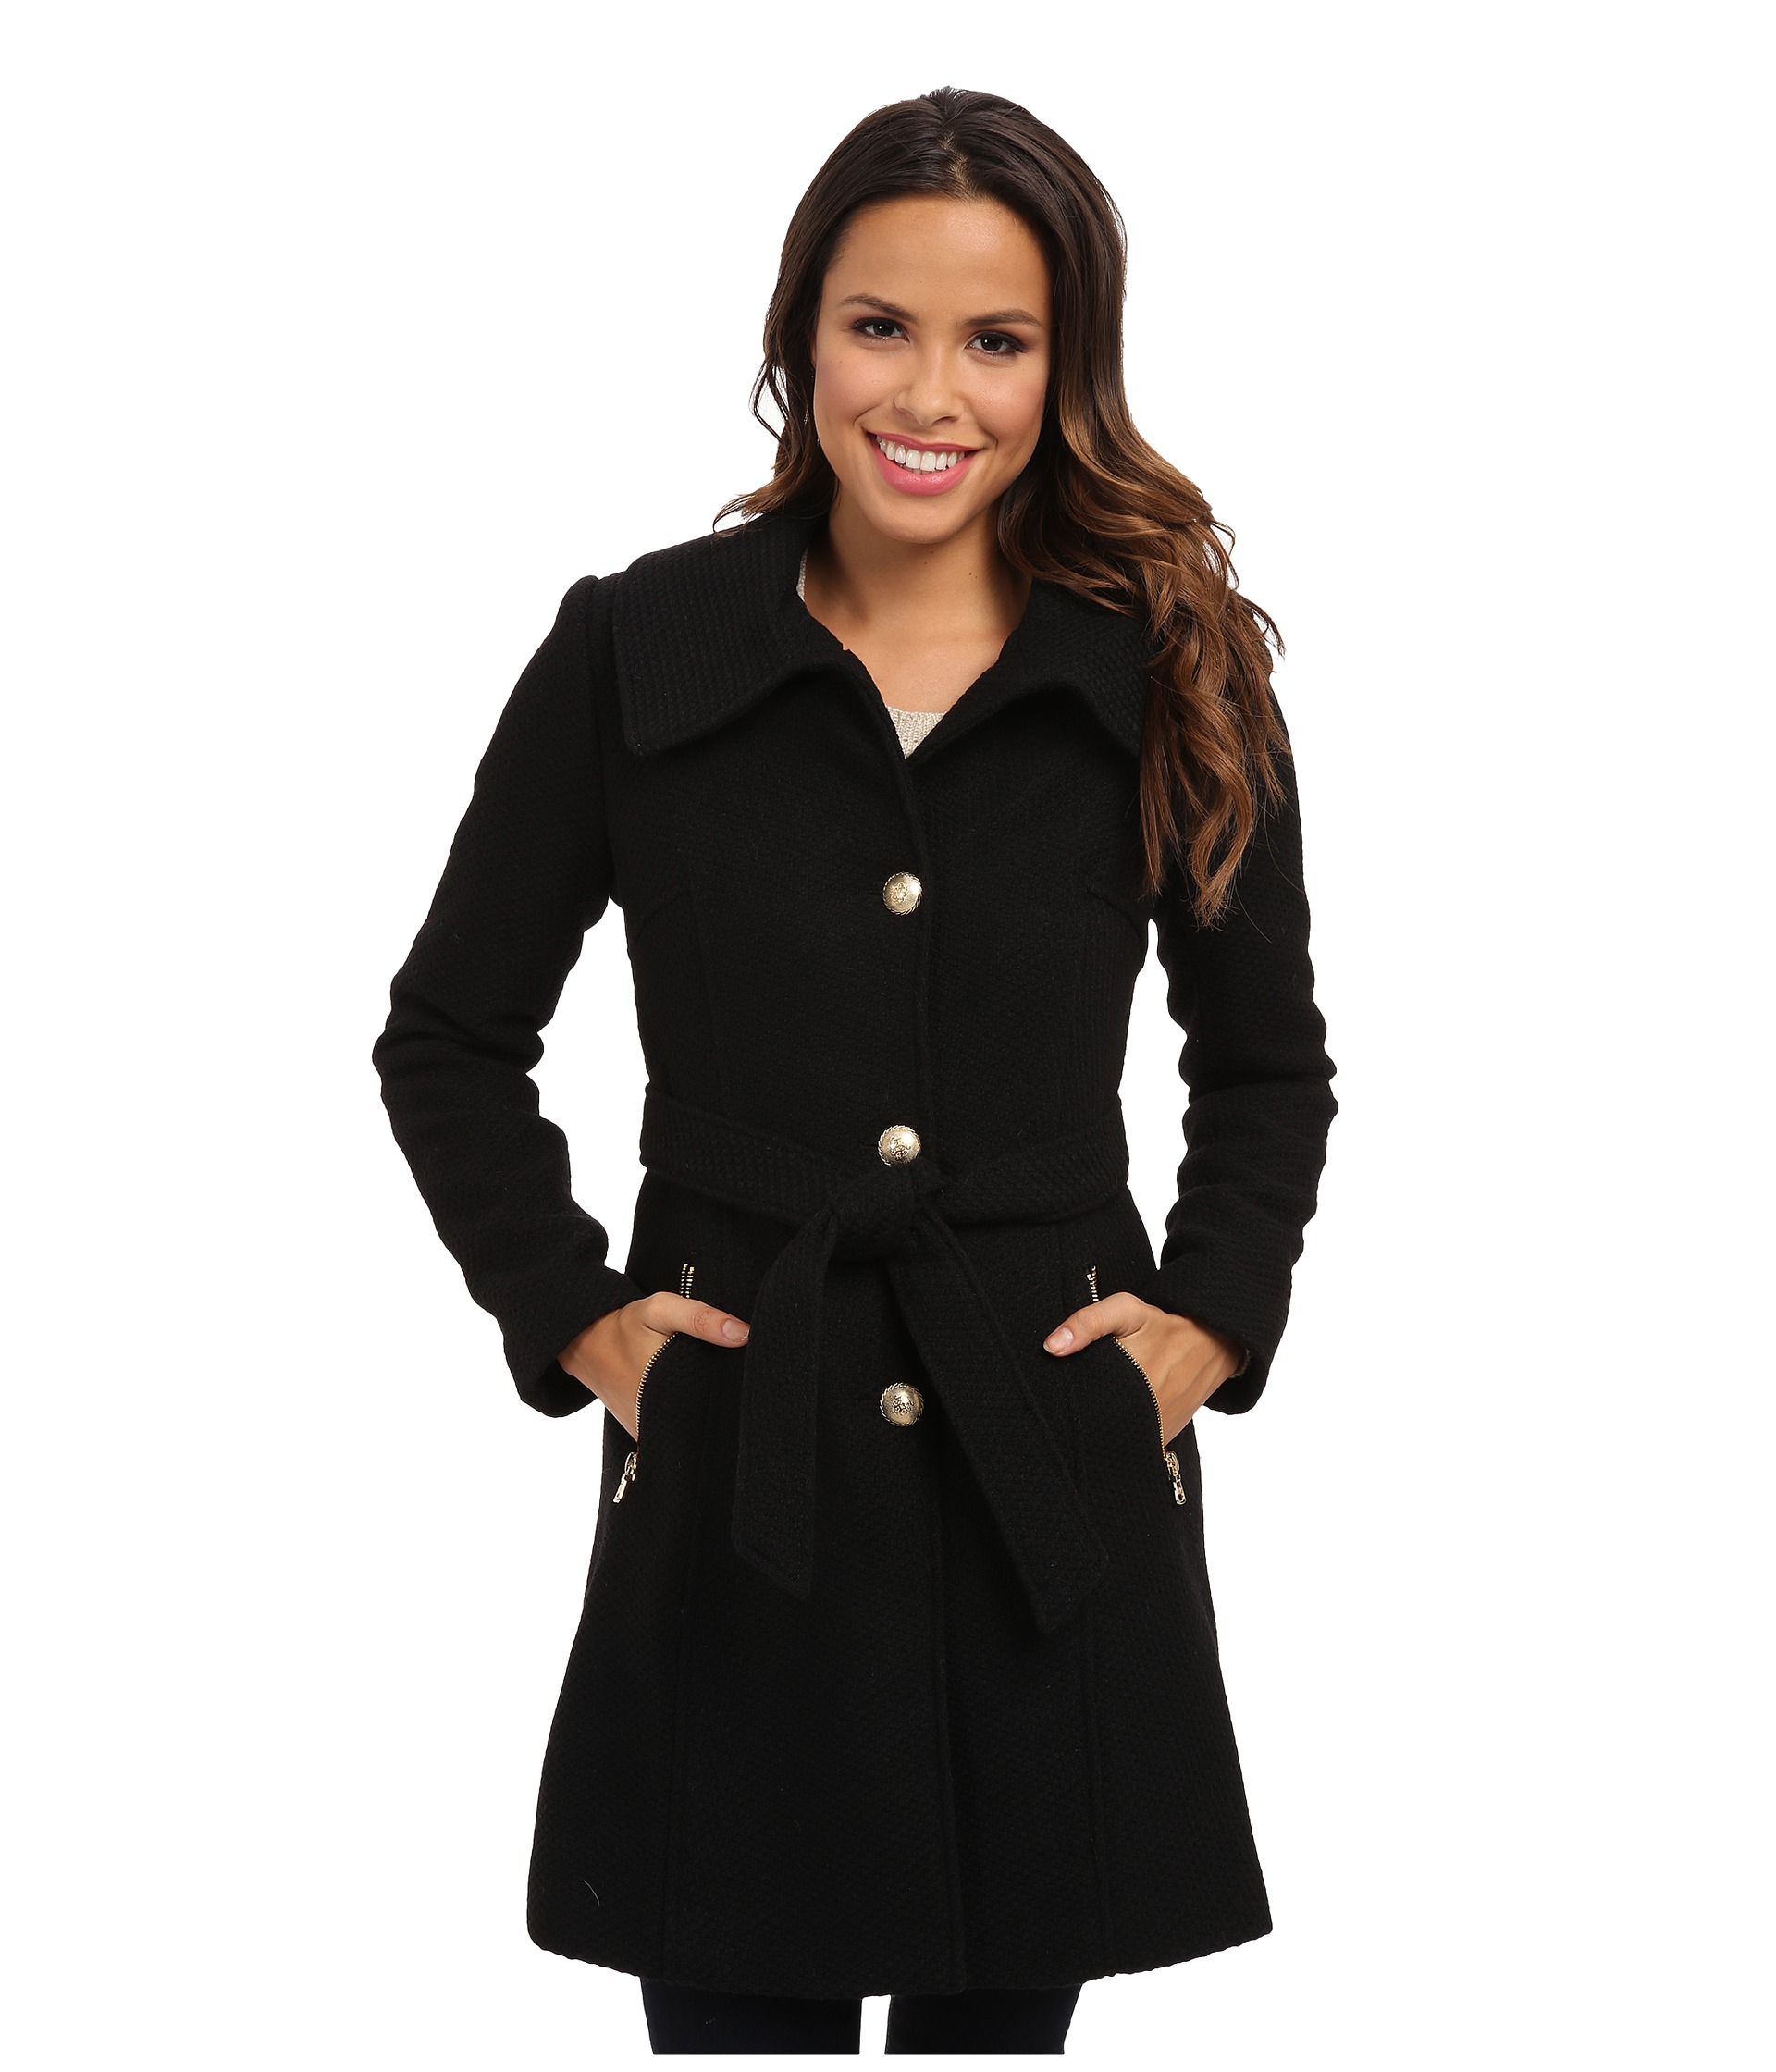 Jessica Simpson Jofmh856 Coat, Clothing, Women | Shipped Free at Zappos1920 x 2240